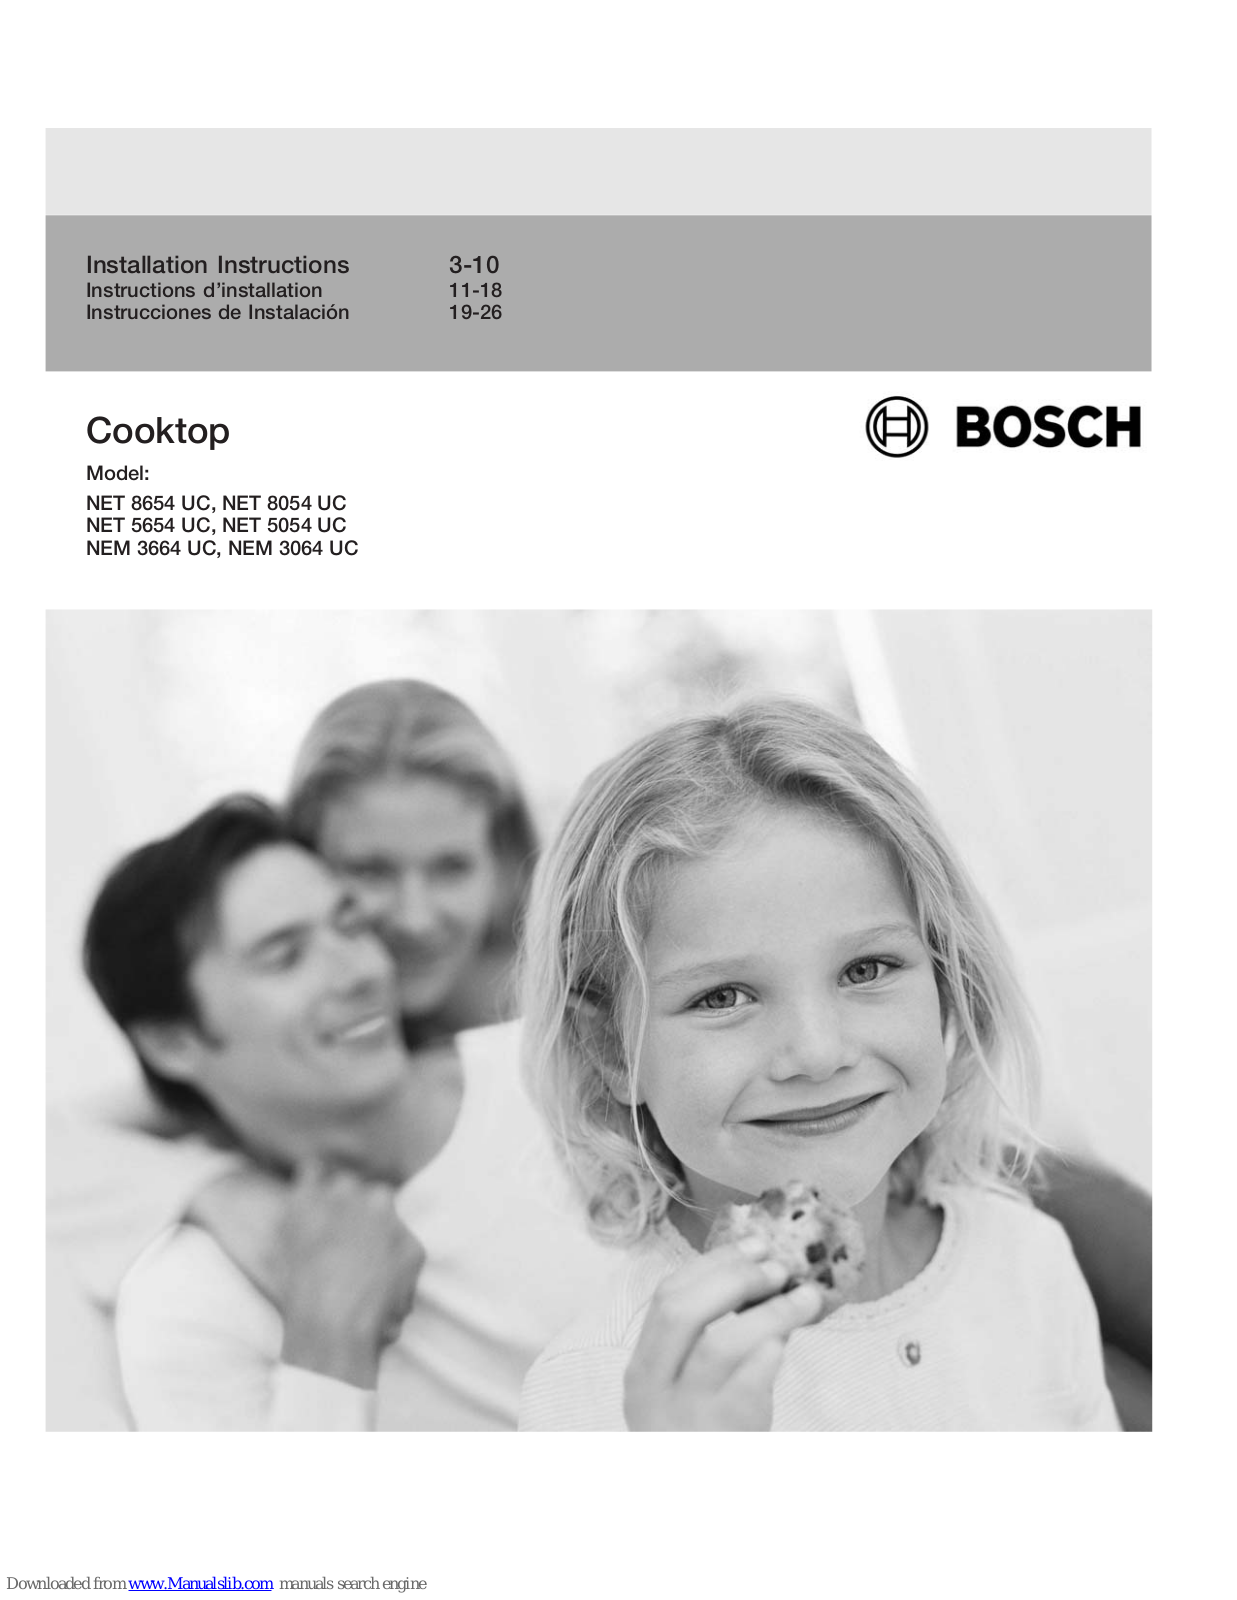 Bosch NET 8654 UC, NET 5654 UC, NET 5054 UC, NET 3064 UC, NET 8054 UC Installation Instructions Manual